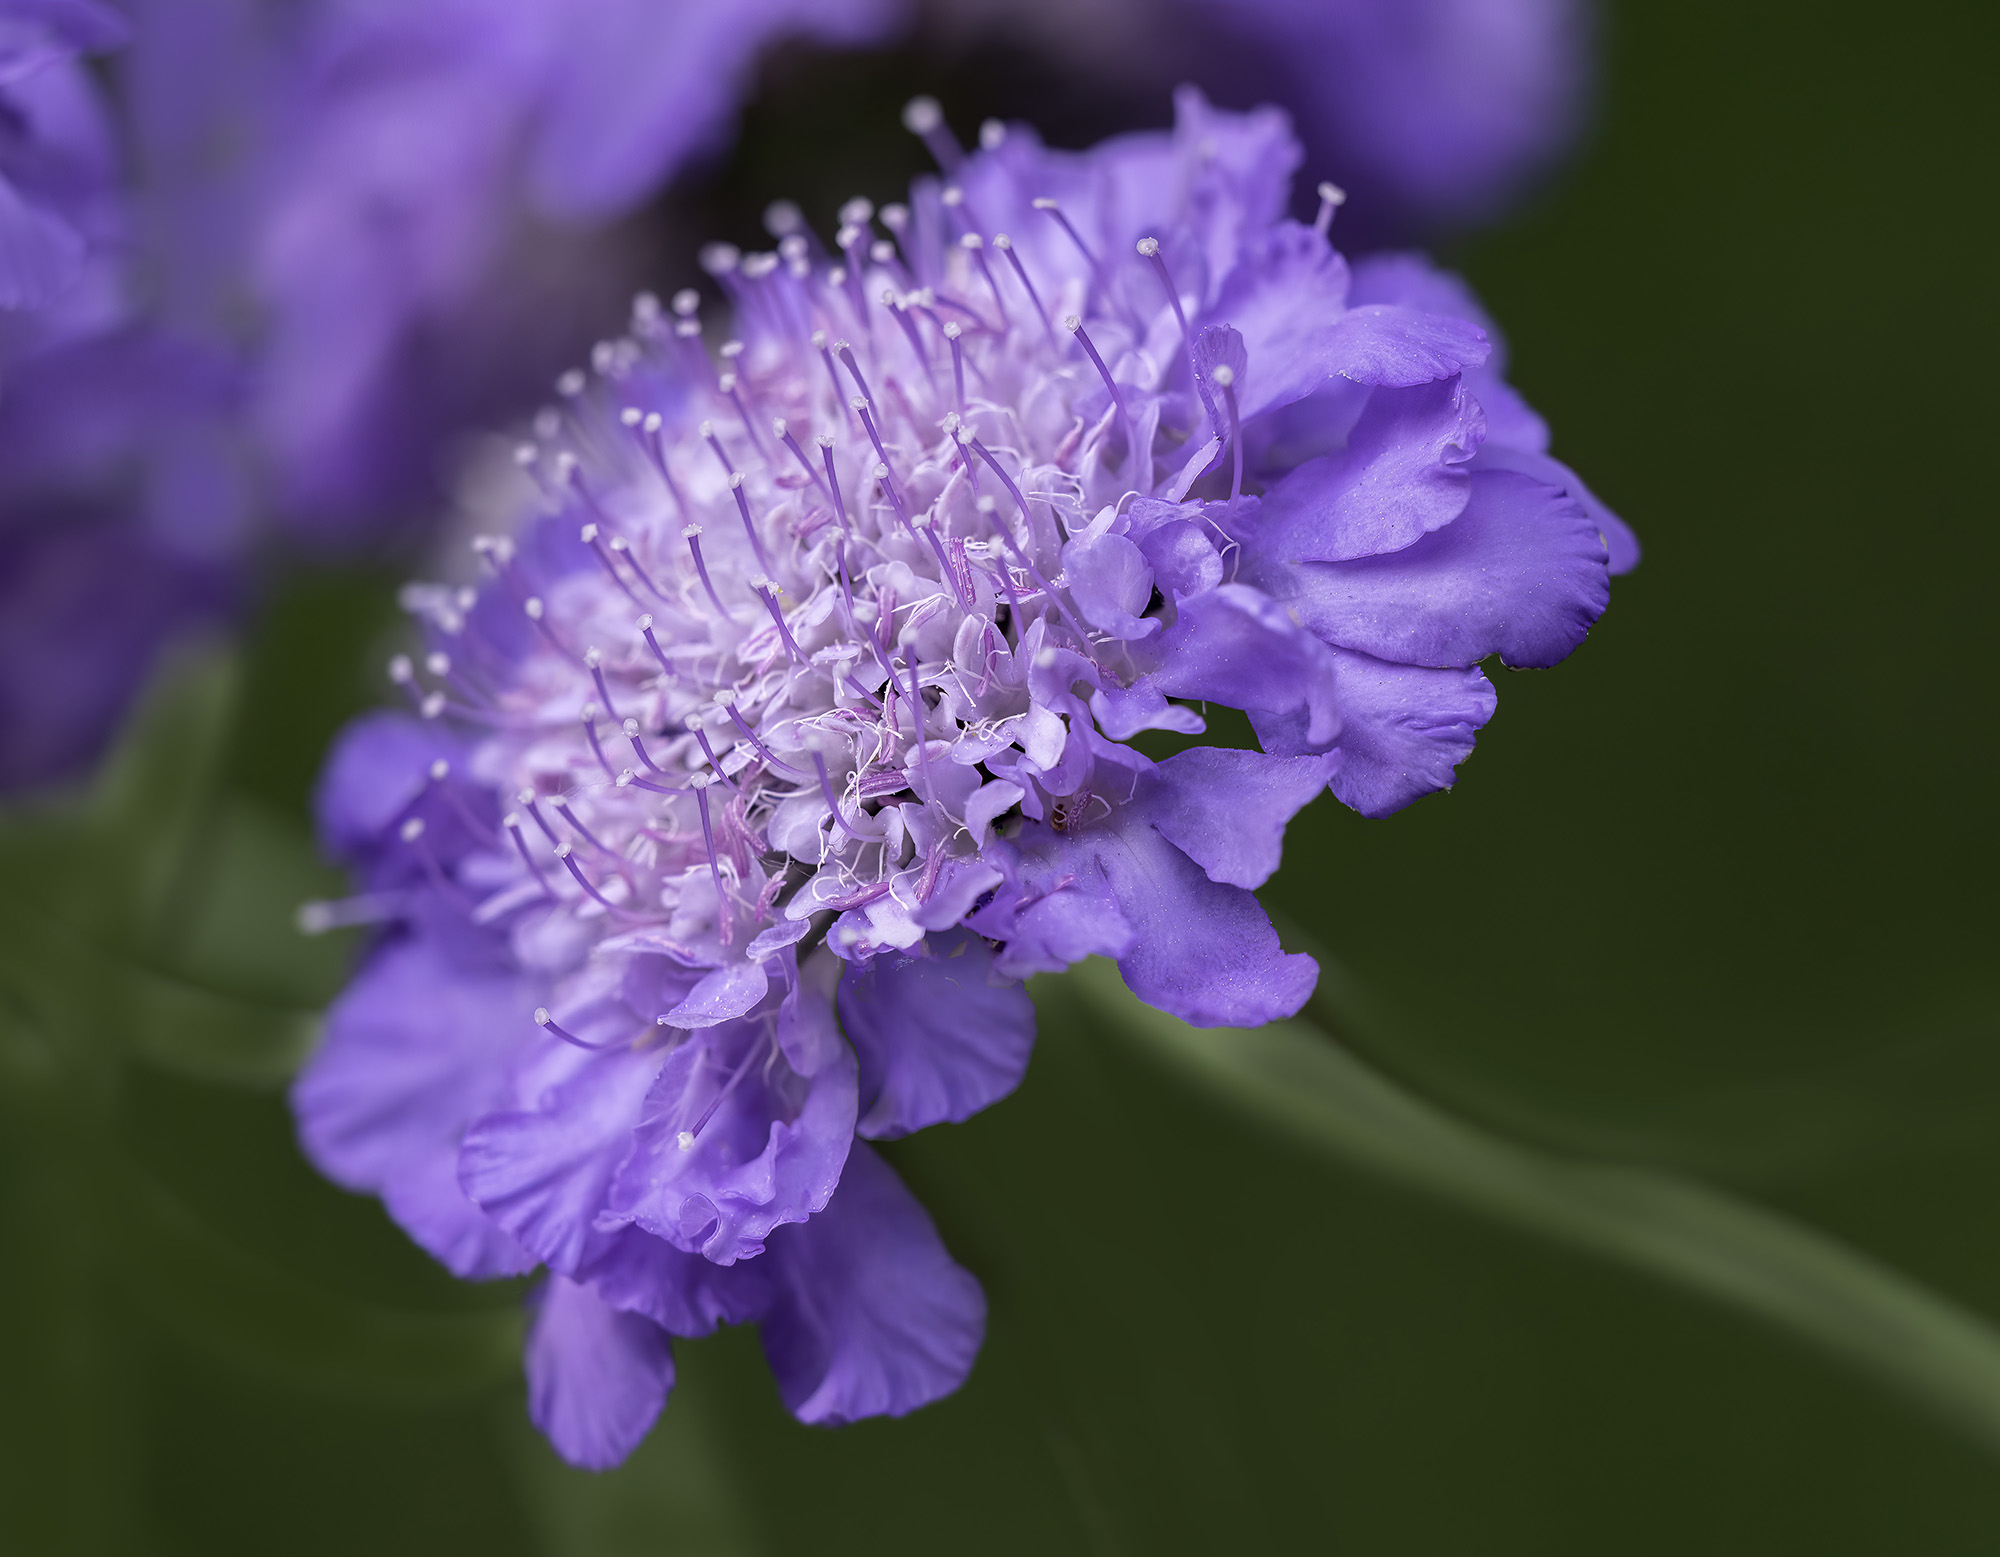 Pincushion Flower by Ruth Mayer